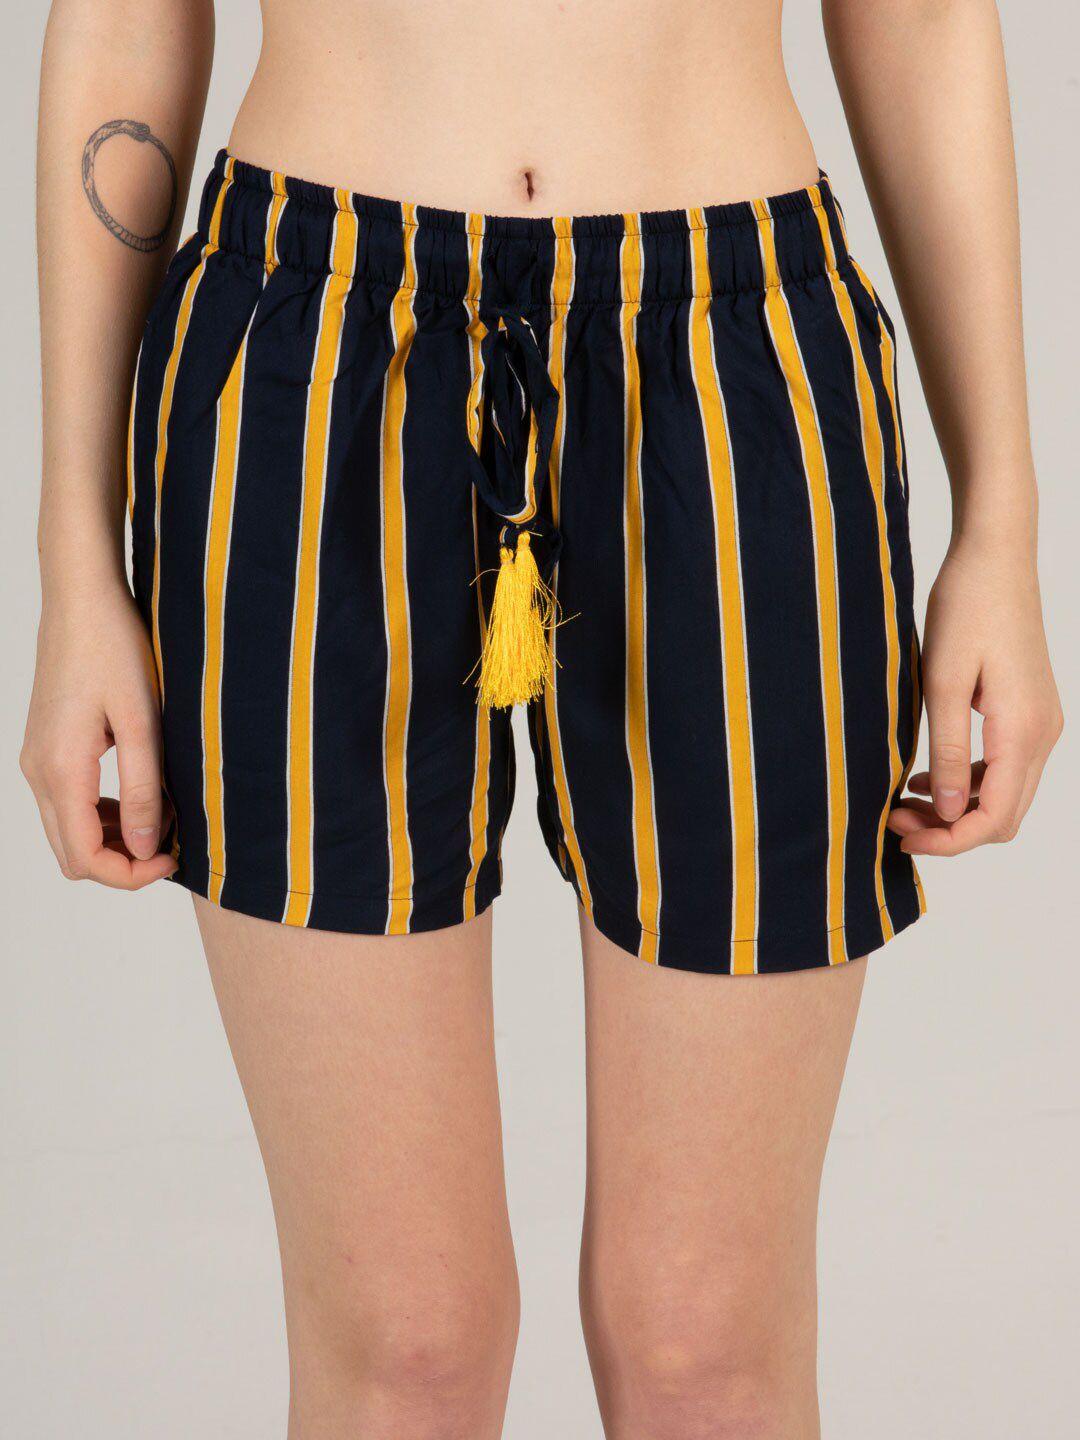 evolove-women-black-&-mustard-yellow-striped-lounge-shorts